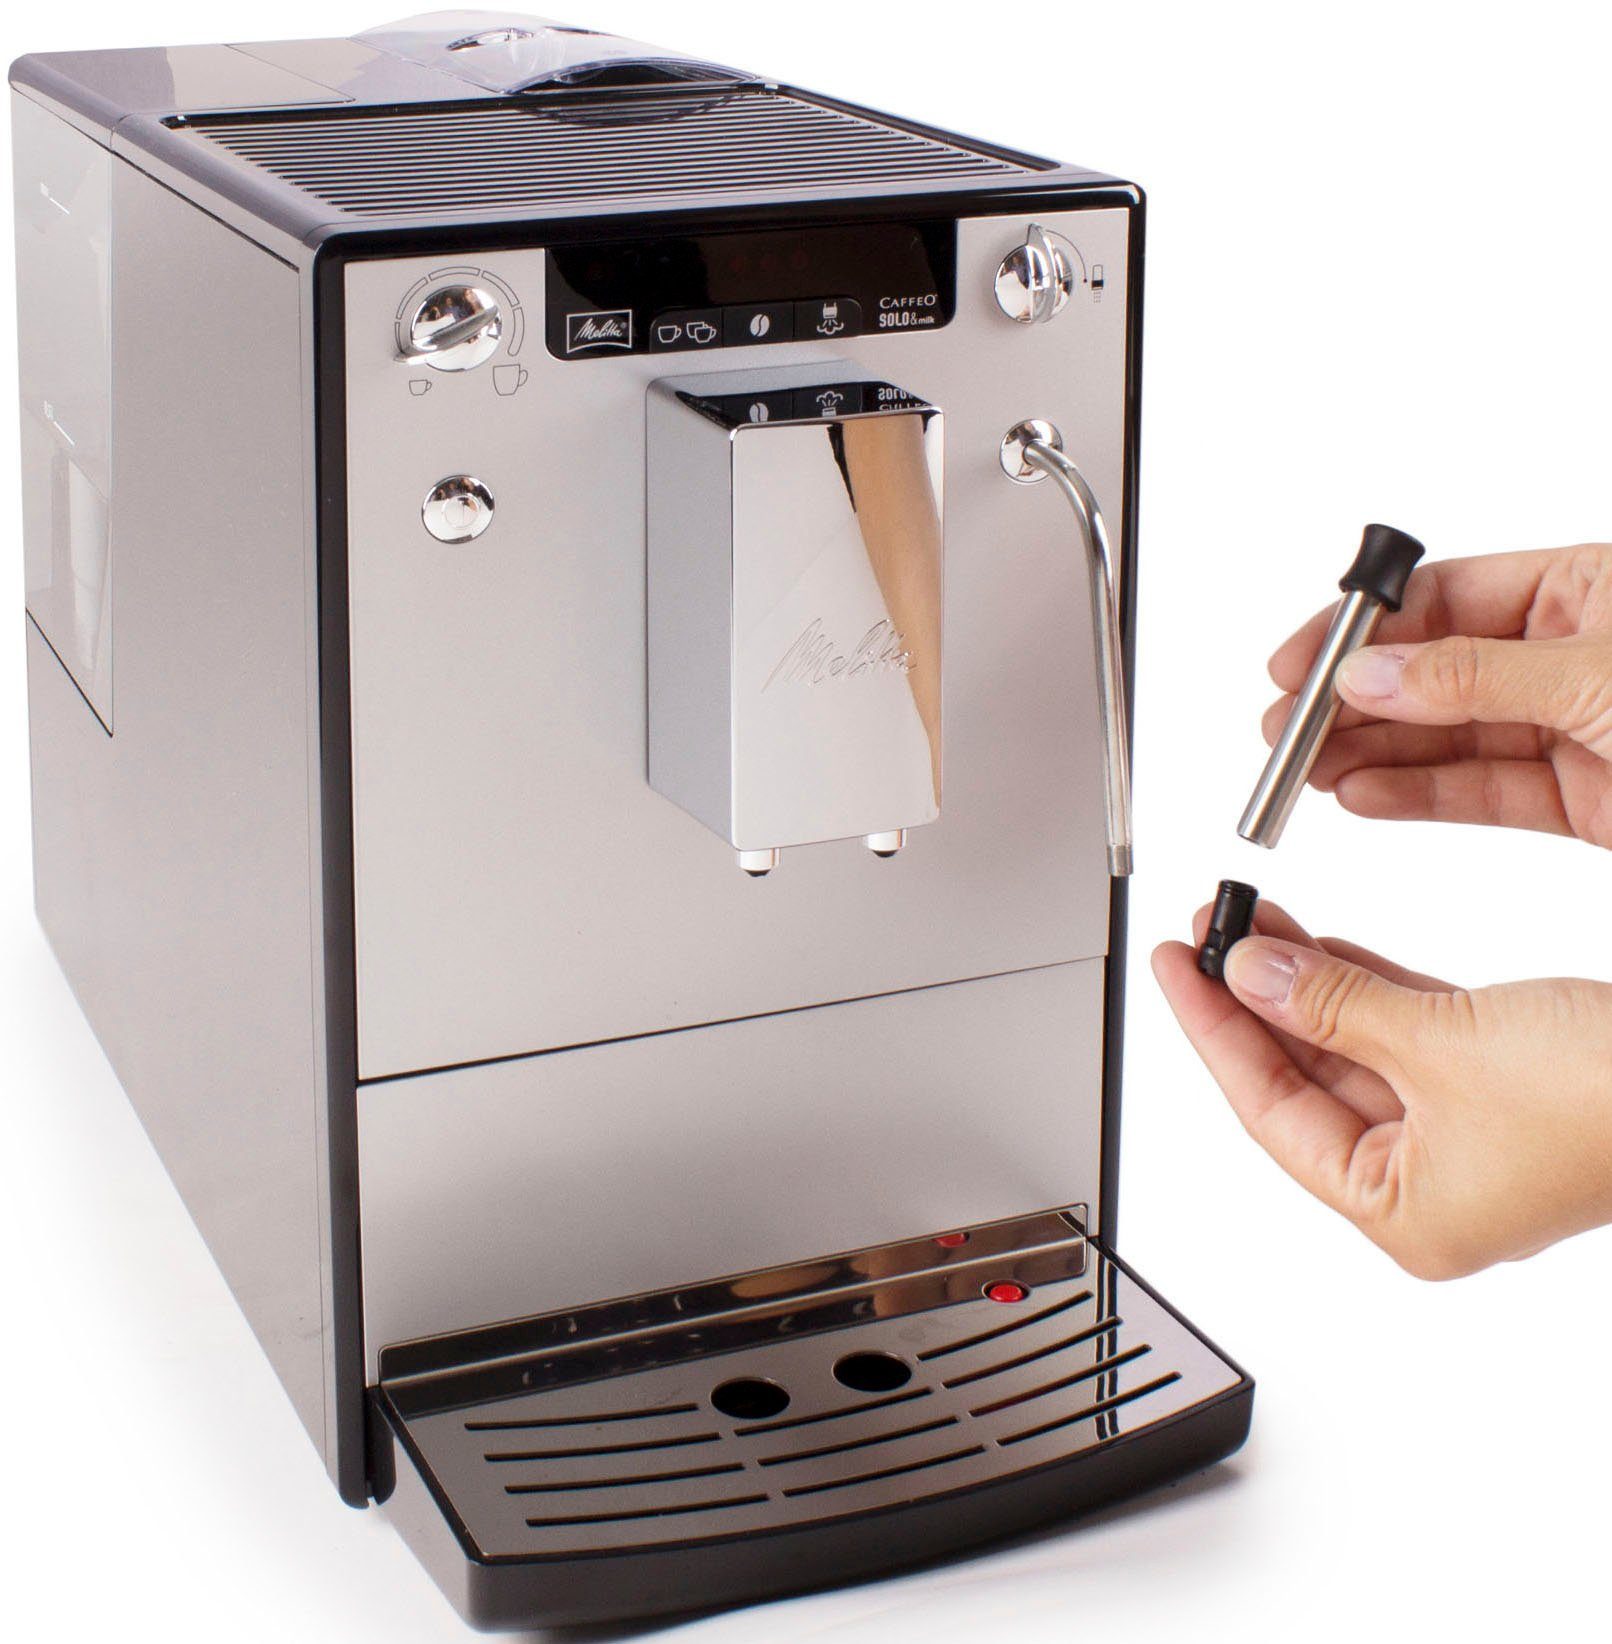 Melitta Kaffeevollautomat Solo® & Milk Milchschaum per Touch, silber/schwarz, & Café crème Düse E953-202, Espresso One für